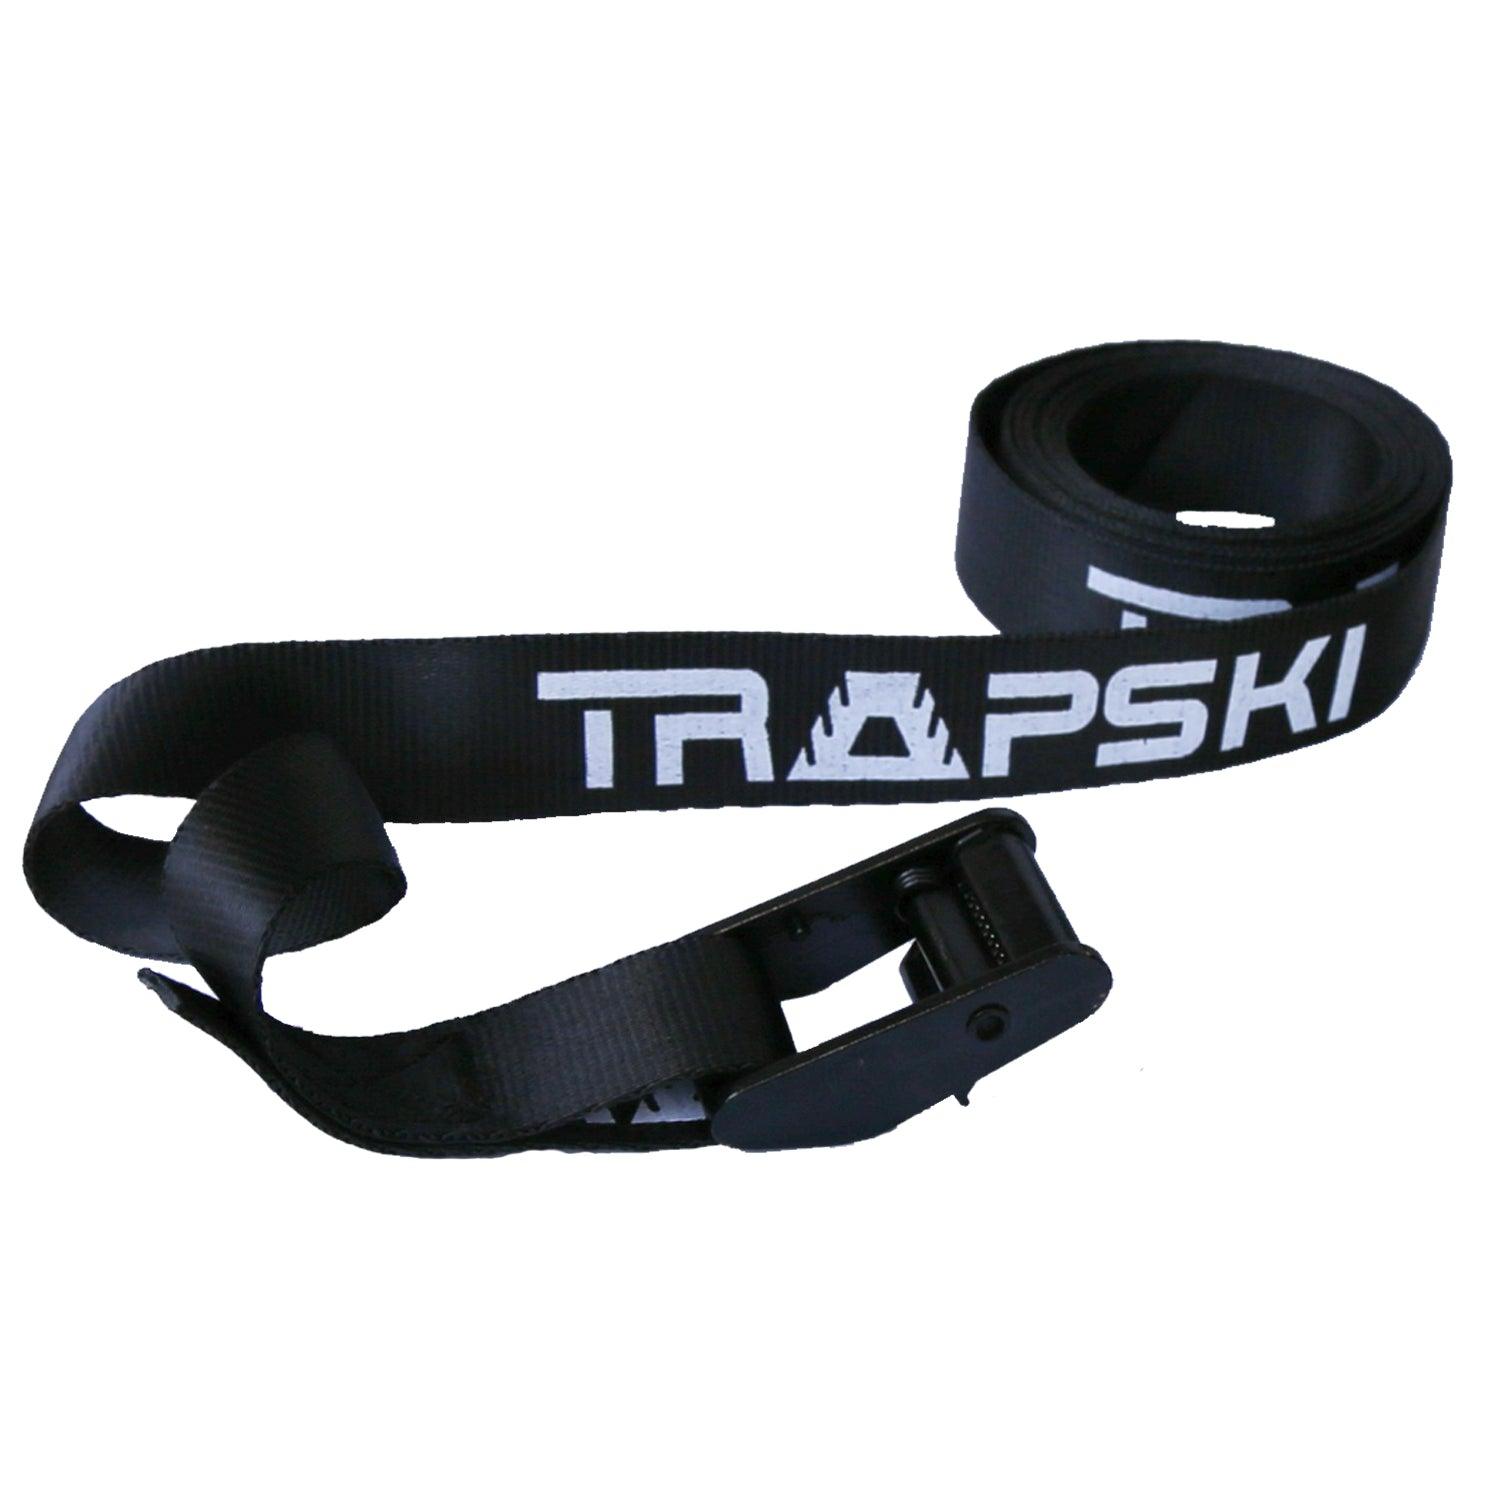 TRAPSKI Premium Strap | Cam Buckle Tie Down Strap | Heavy Duty Lashing Strap | Car Roof Rack Strap for Kayak, SUP, Surfboard, Cargo, Motorcycle, Truck, Boat & Bike - TRAPSKI, LLC